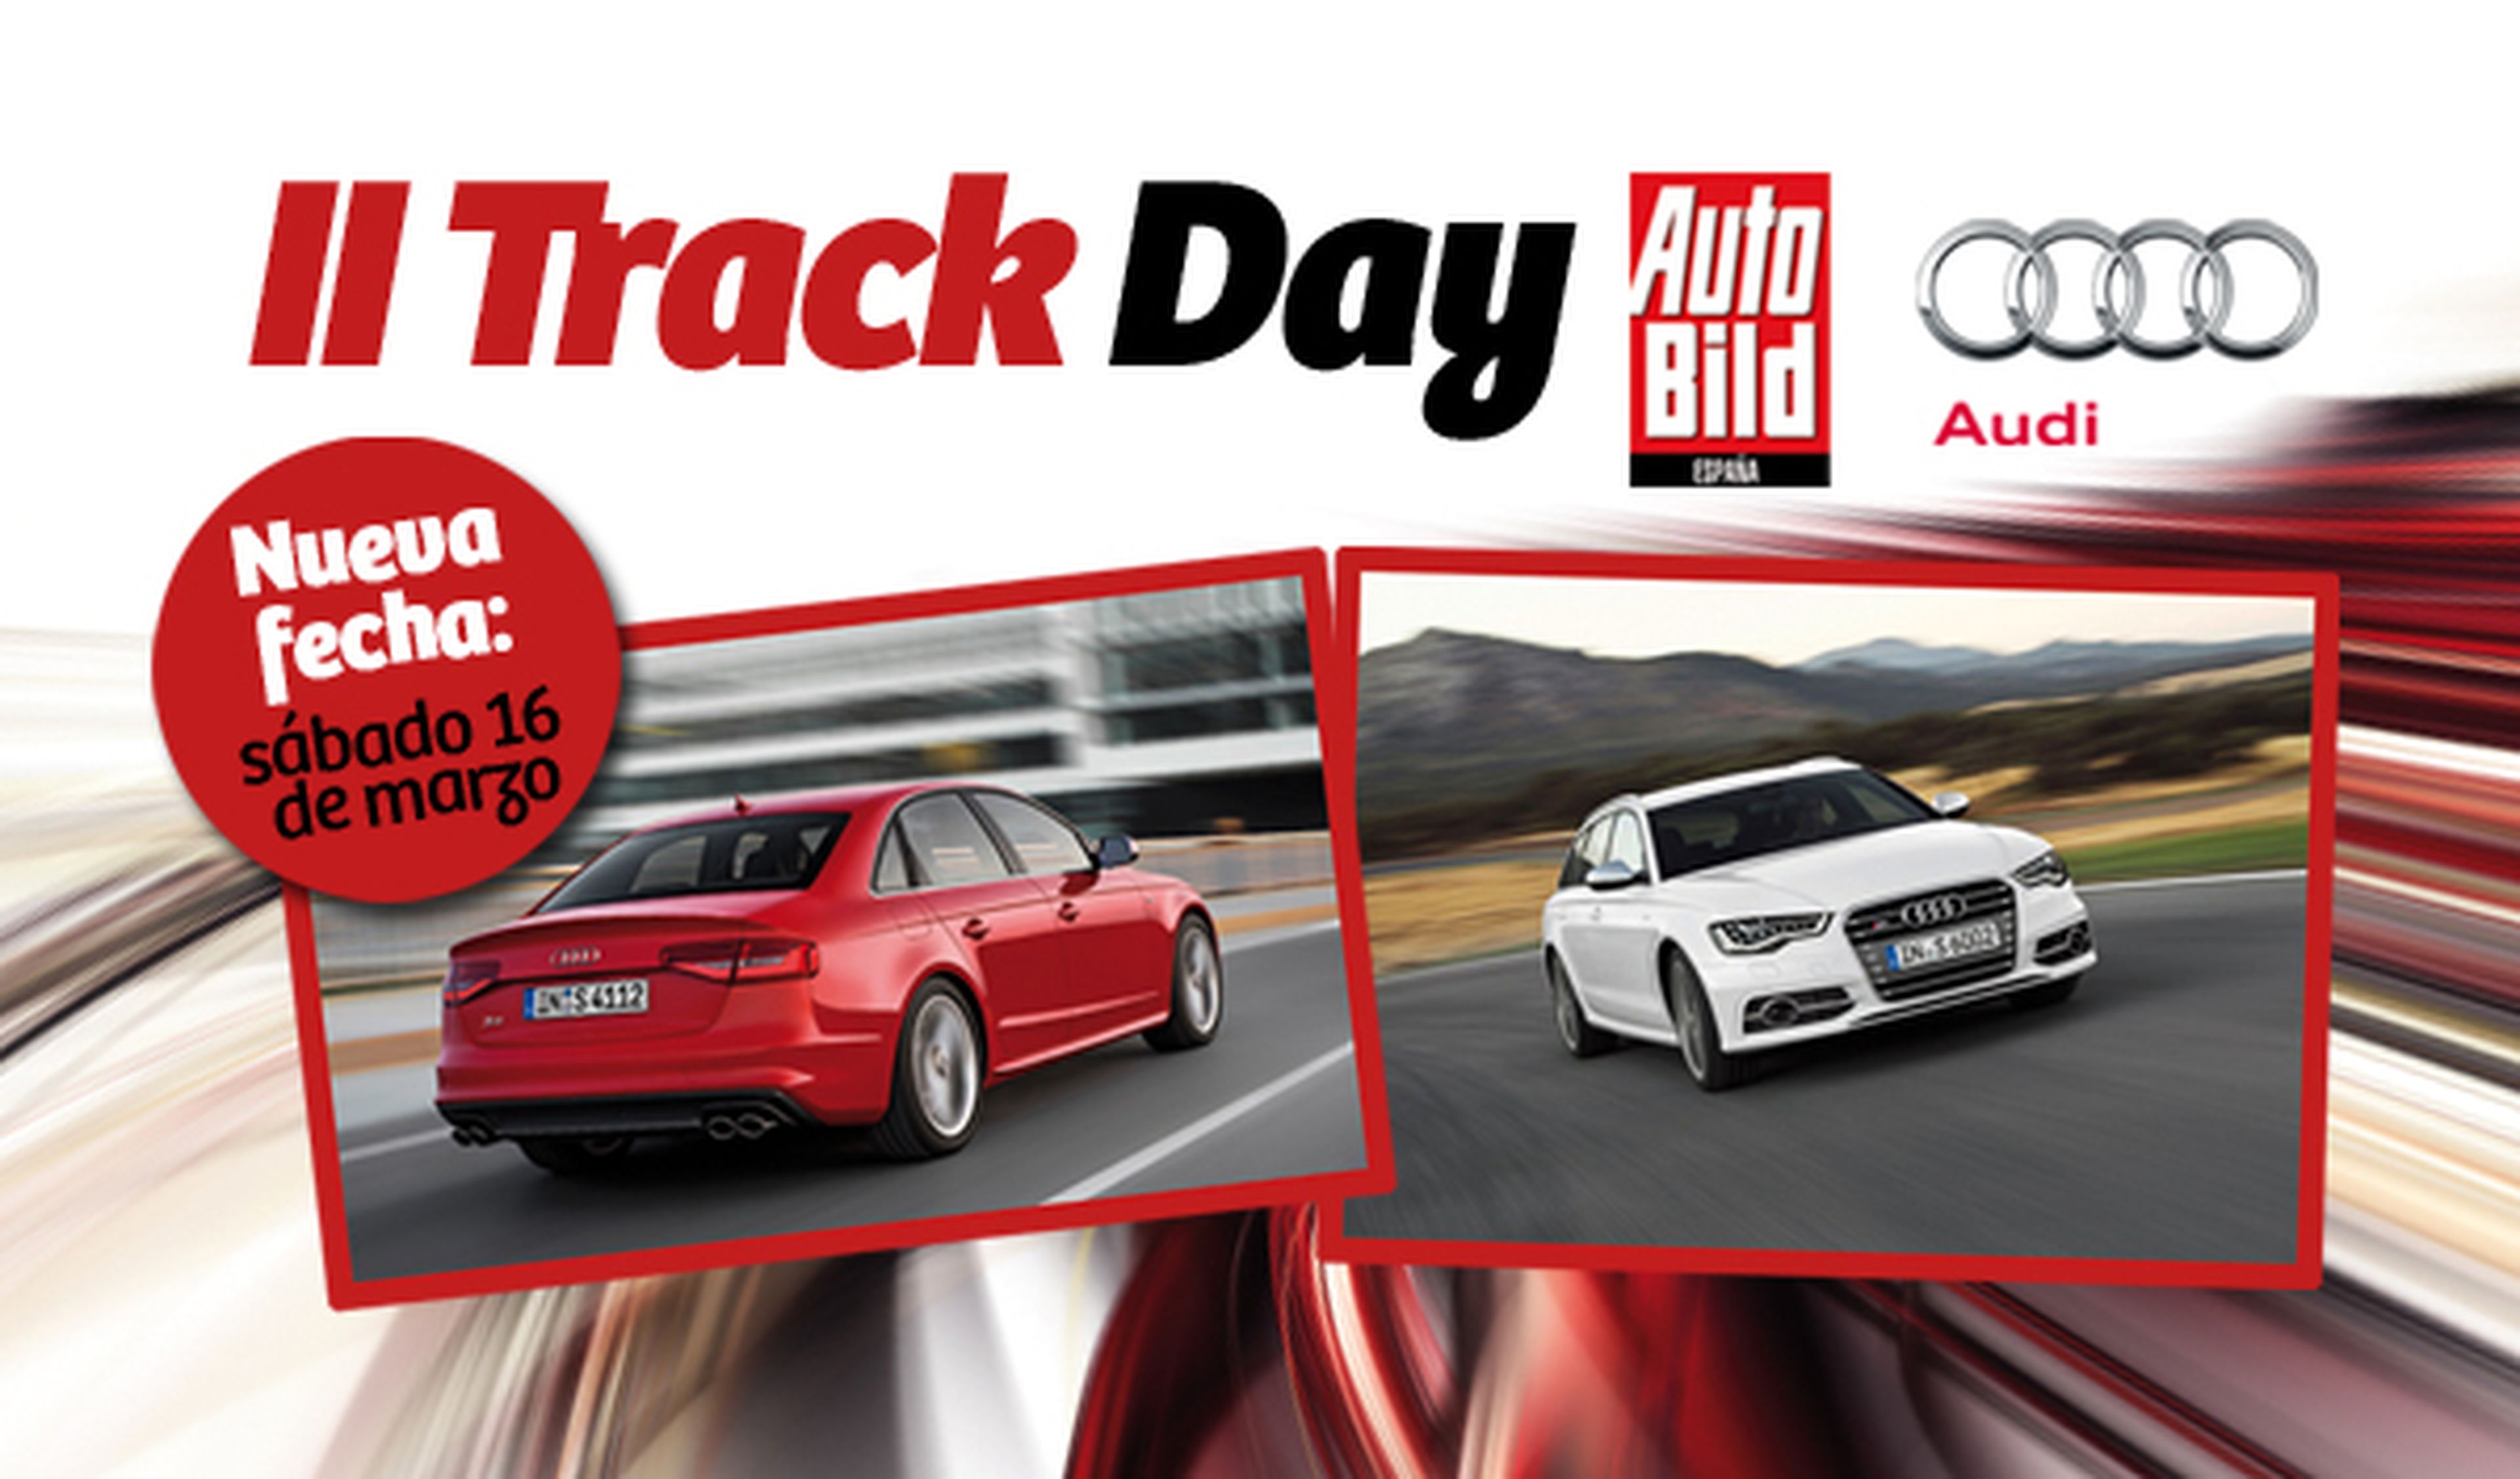 II Track Day AUTO BILD & Audi en el Circuito Kotarr